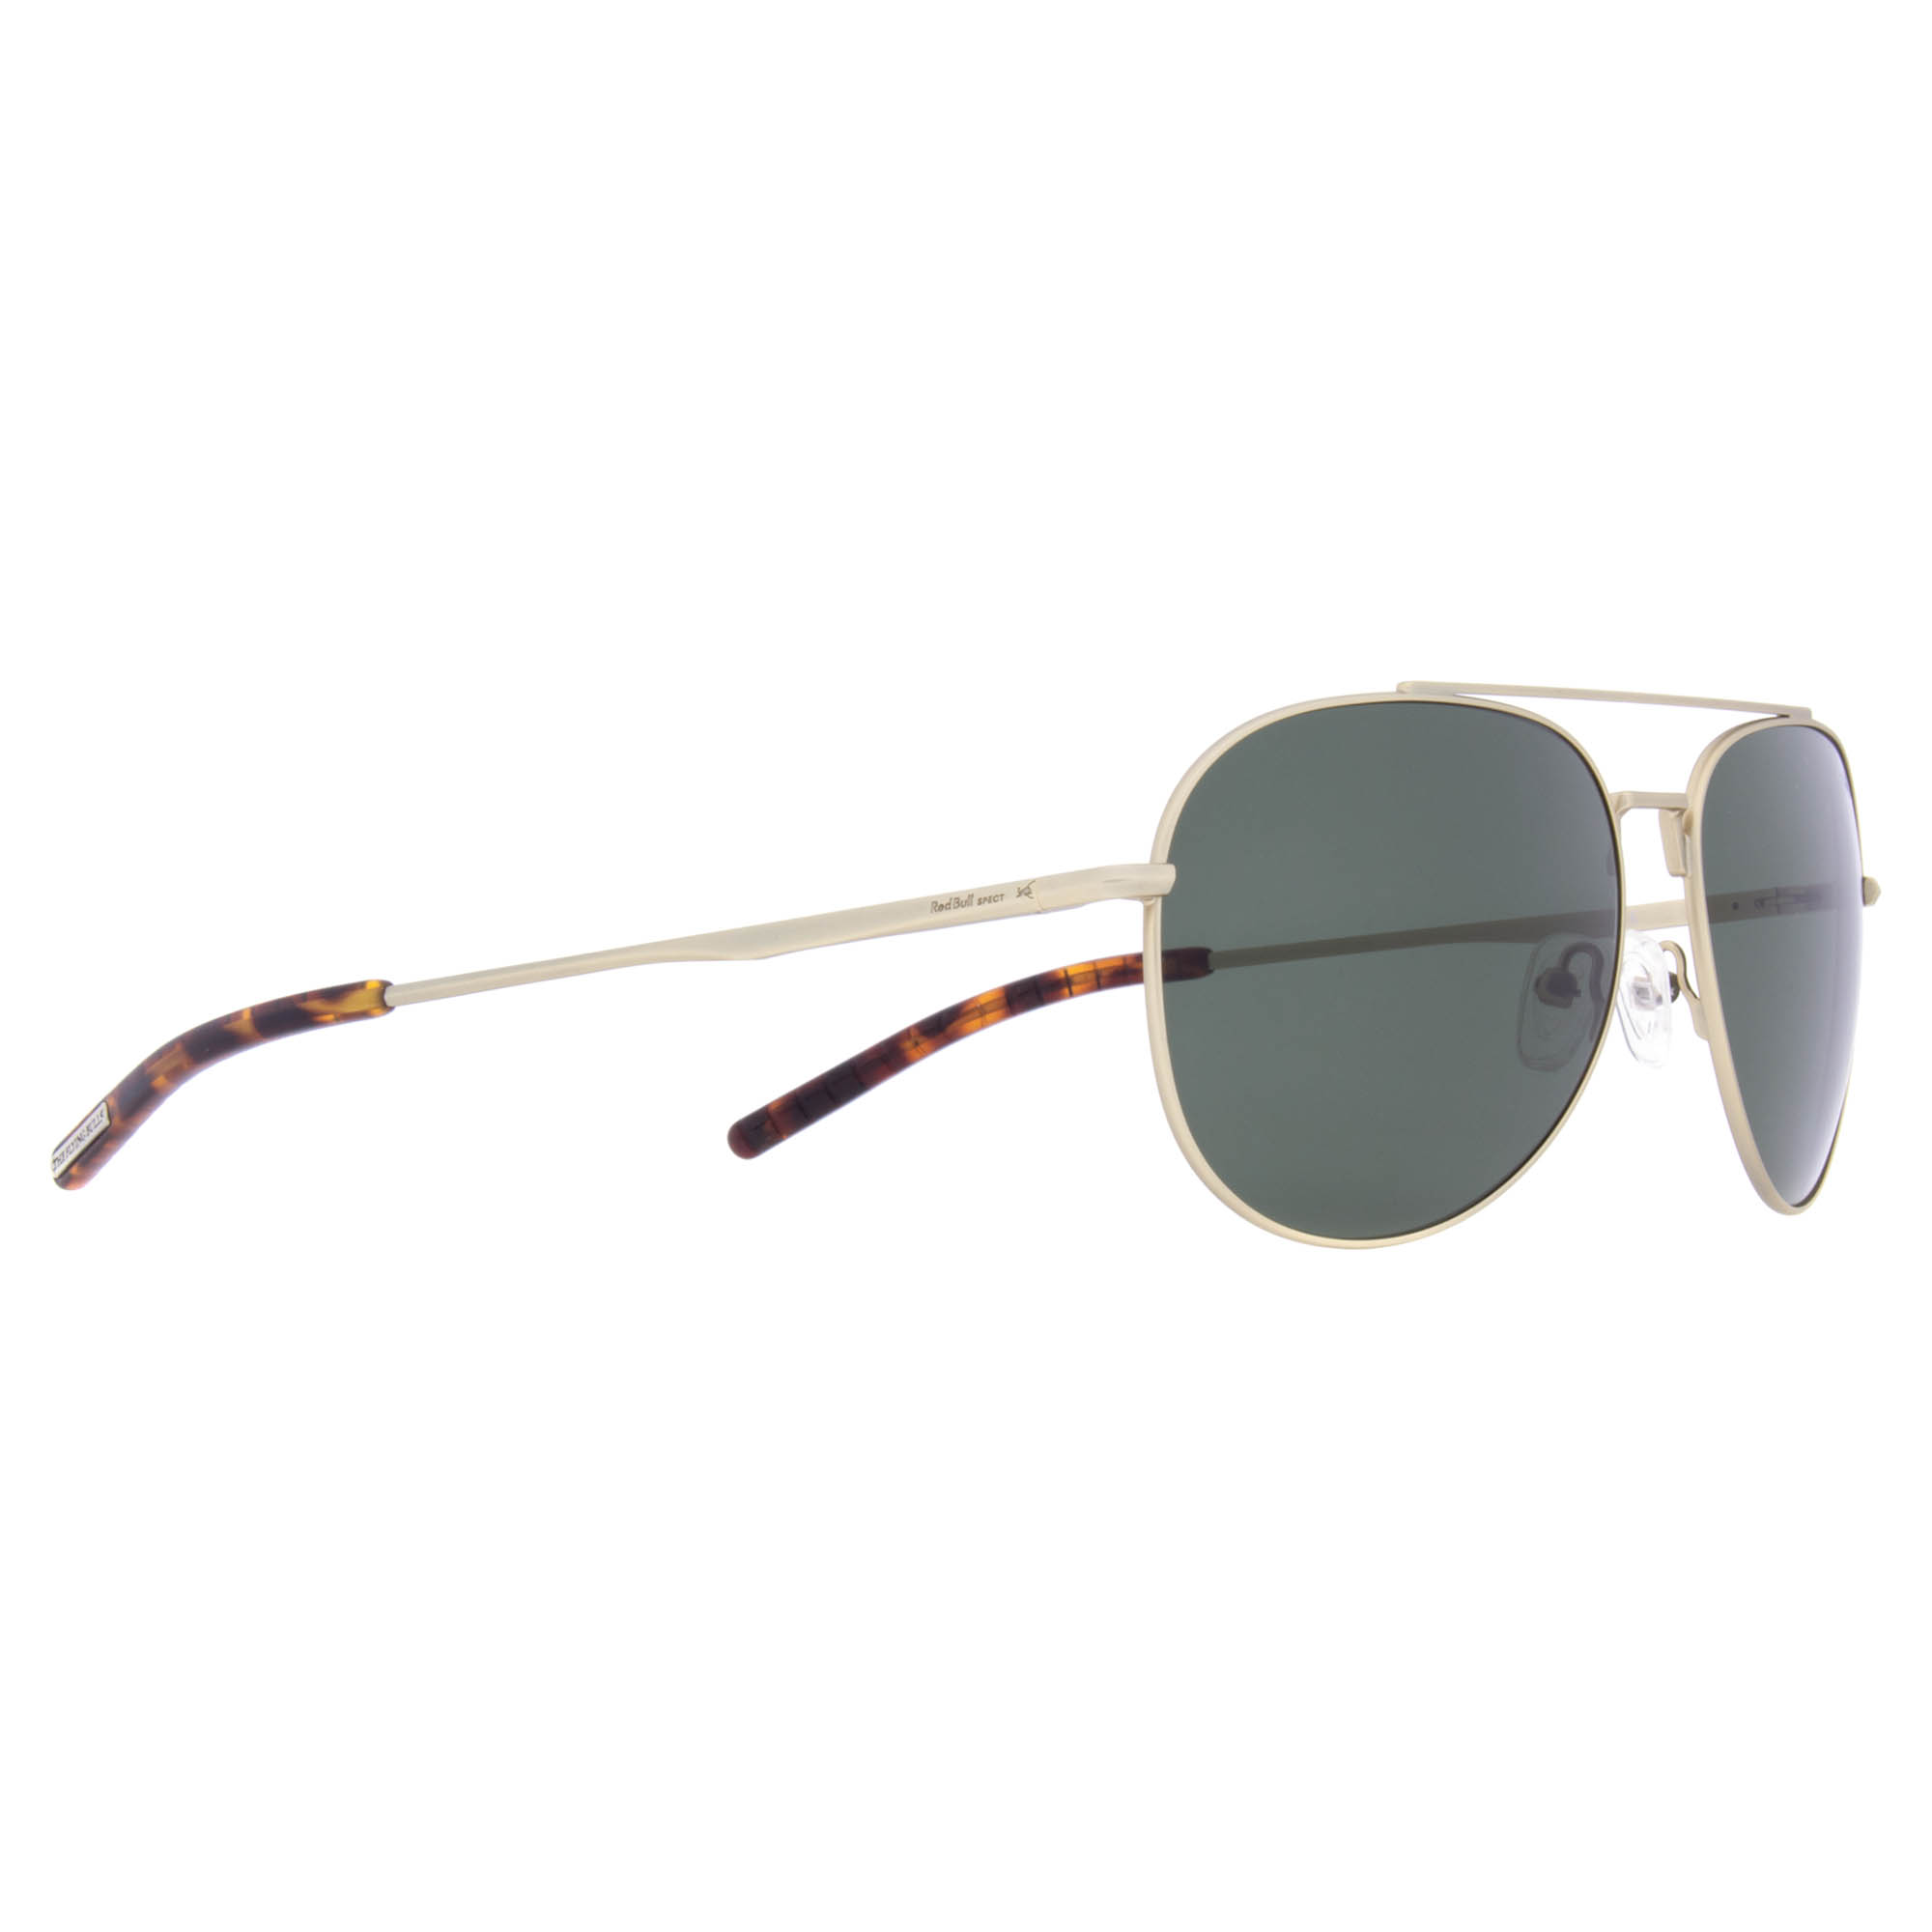 Sunglasses Corsair-001